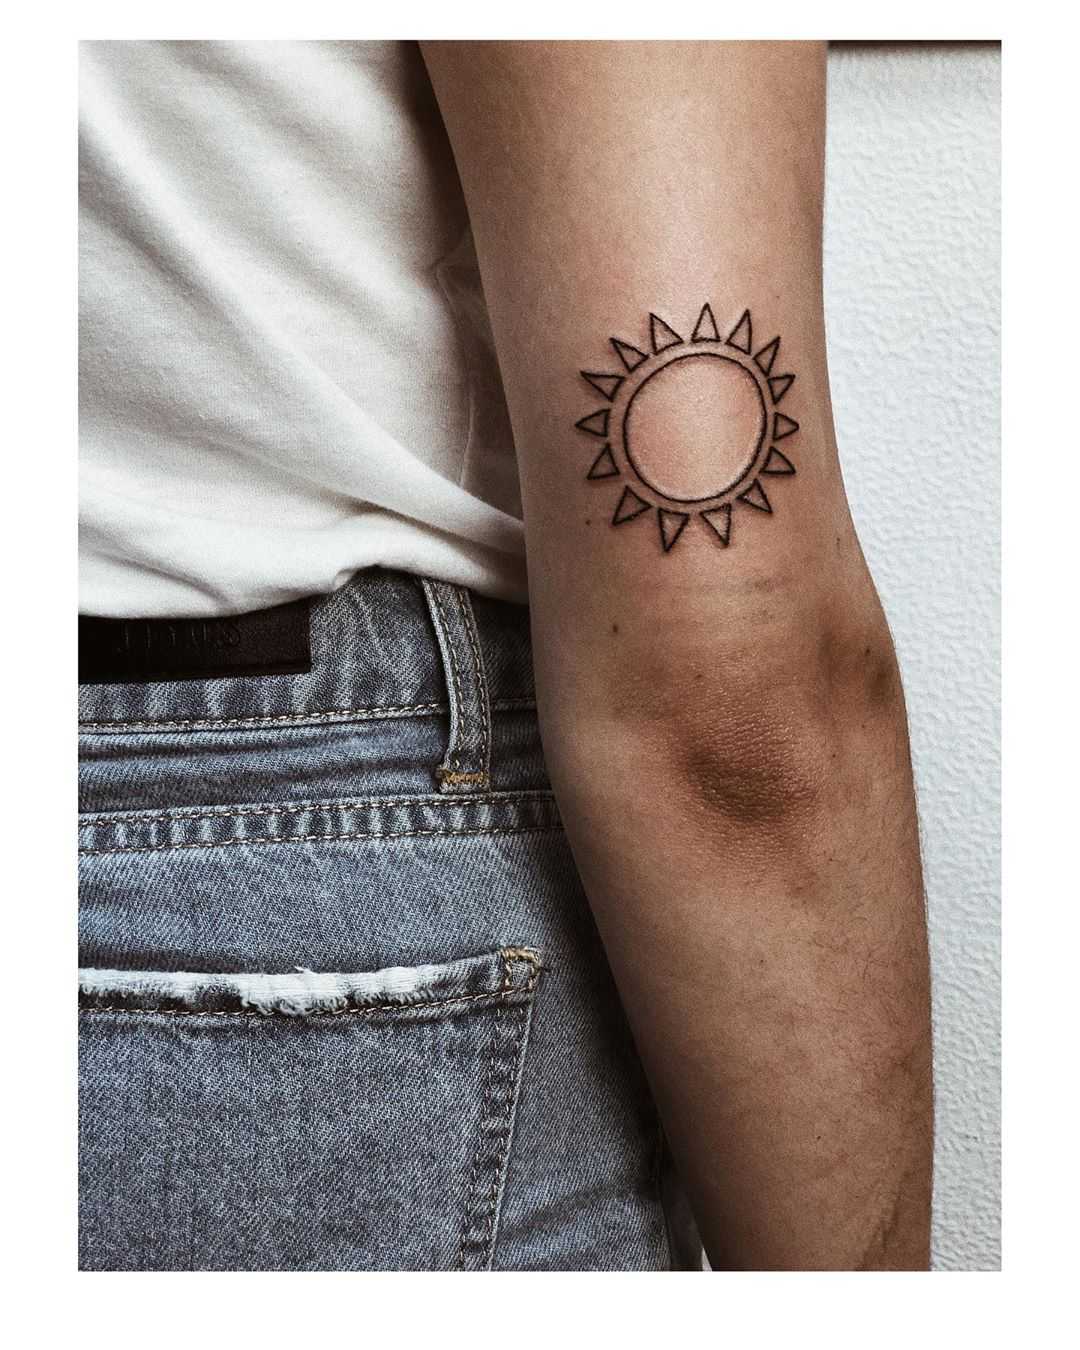 Moon and sun circular tattoo on the inner arm - Tattoogrid.net